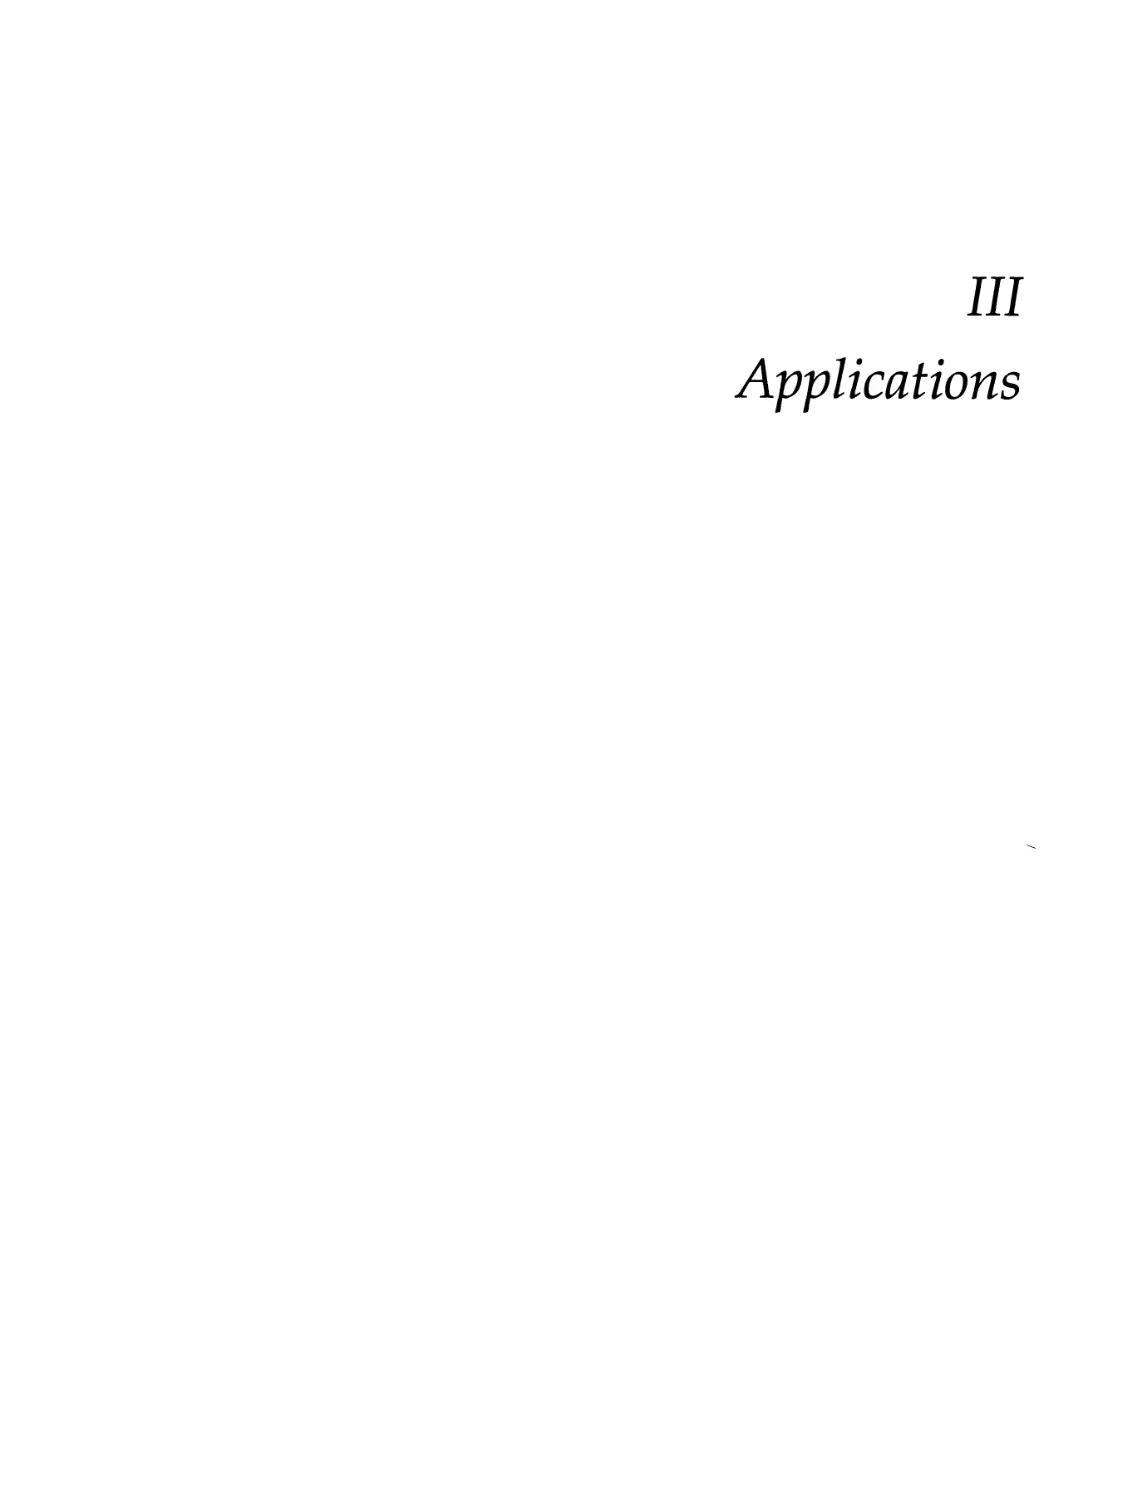 III Applications 503